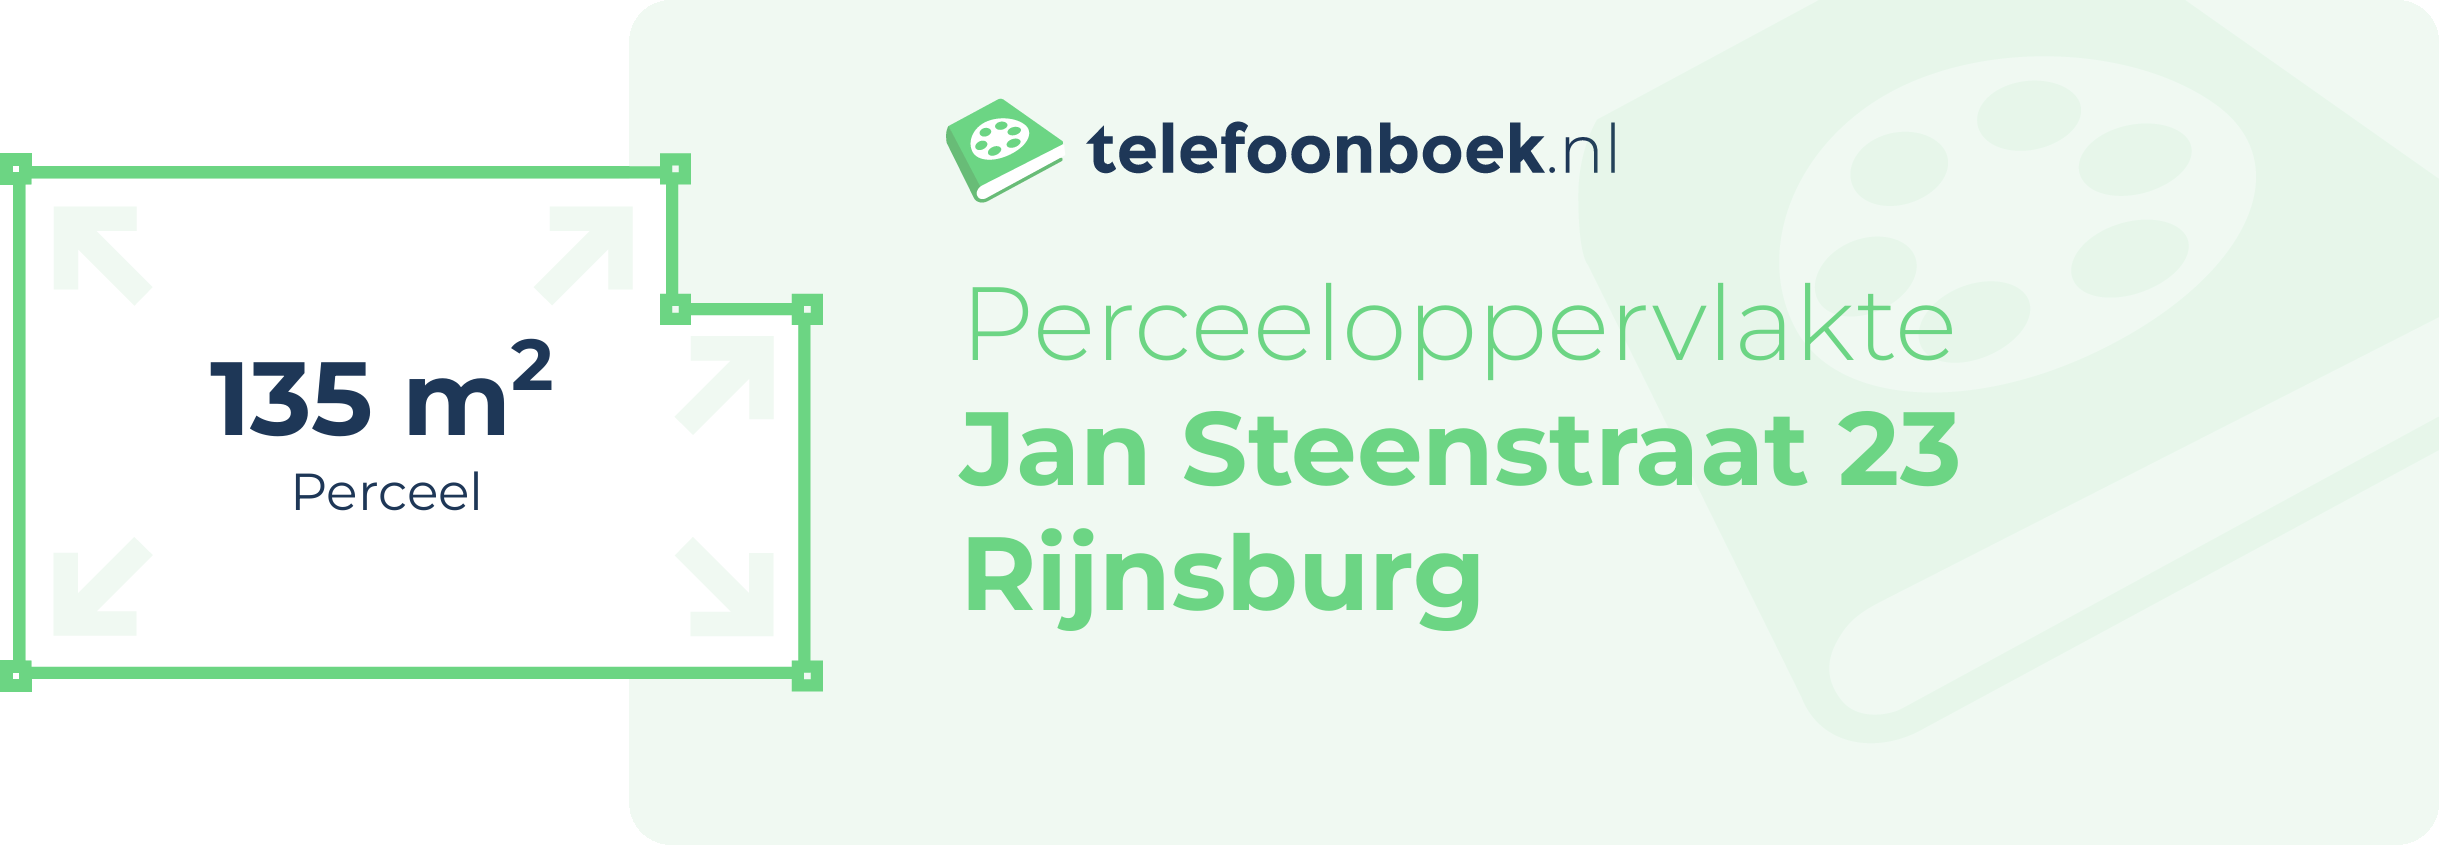 Perceeloppervlakte Jan Steenstraat 23 Rijnsburg